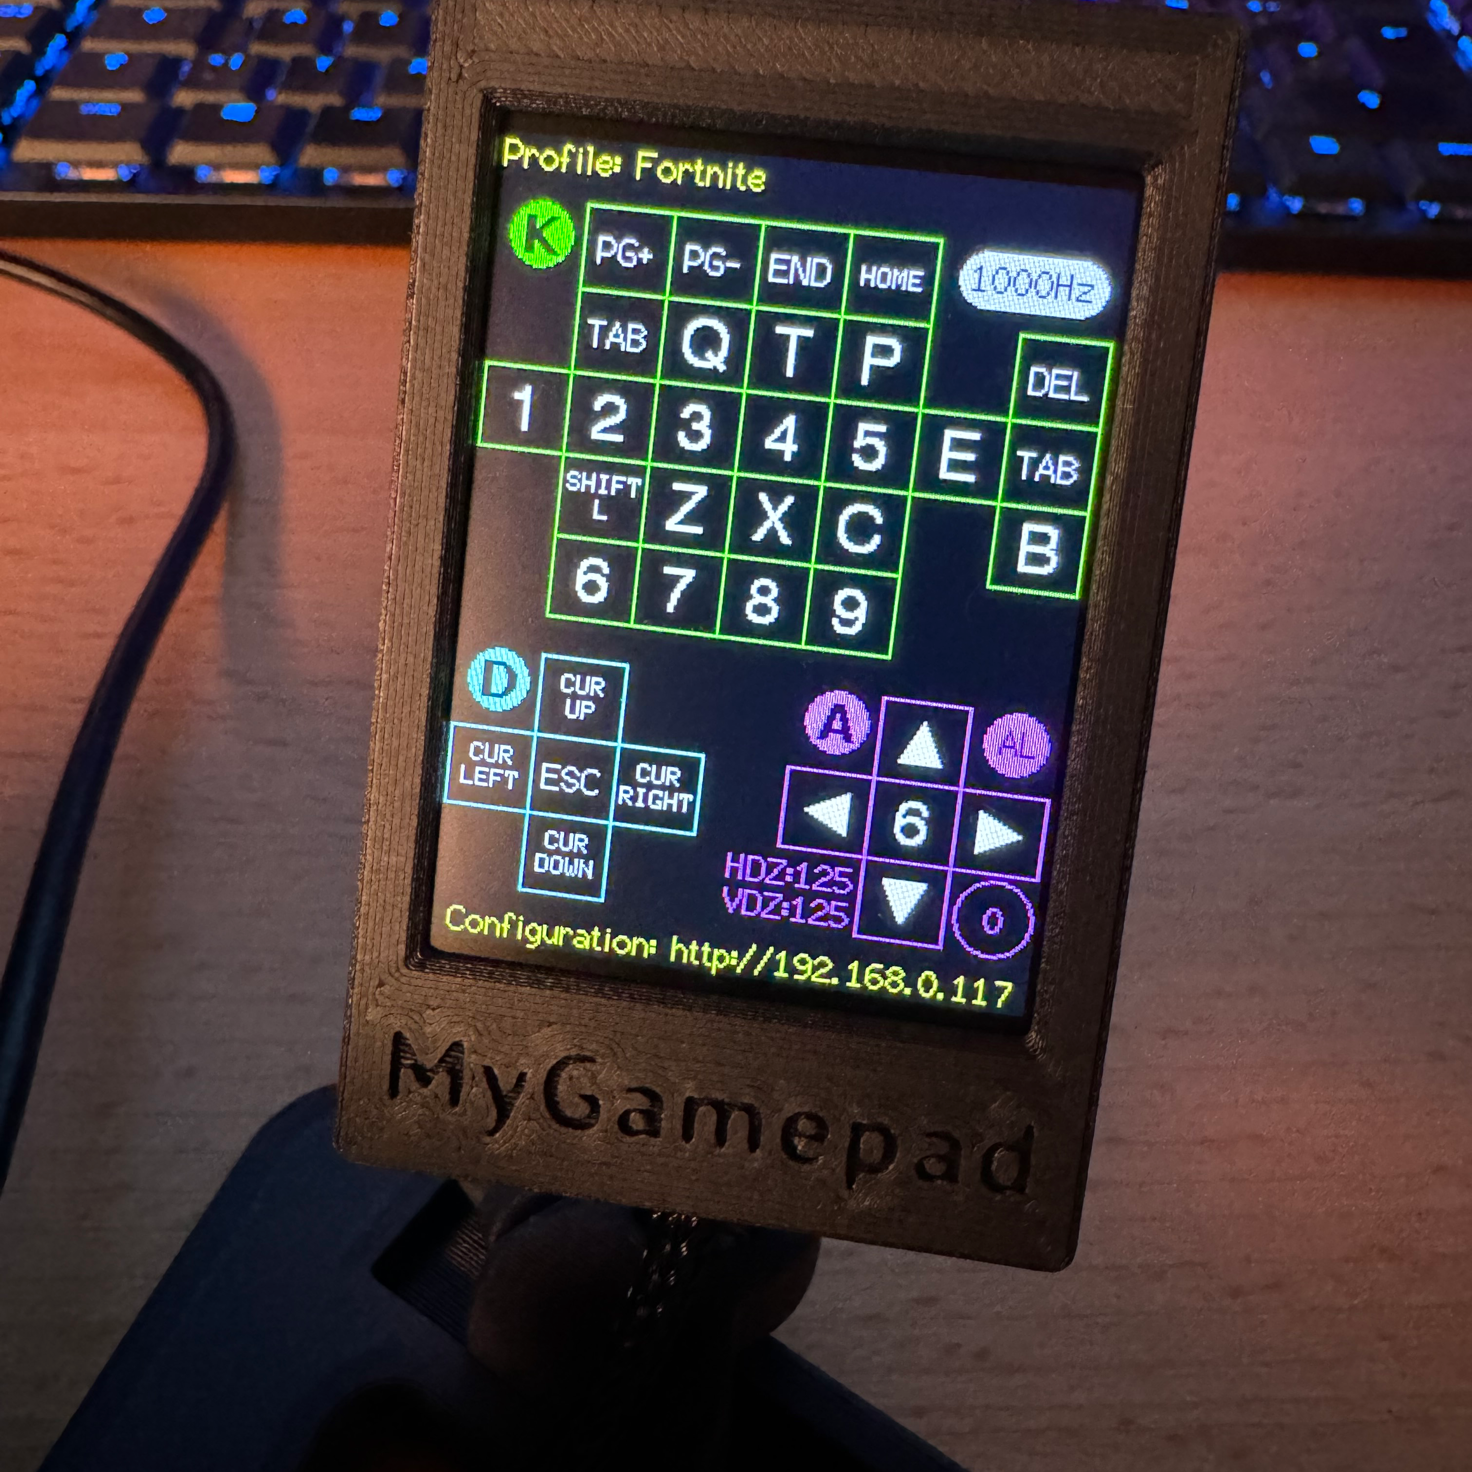 MyGamepad display